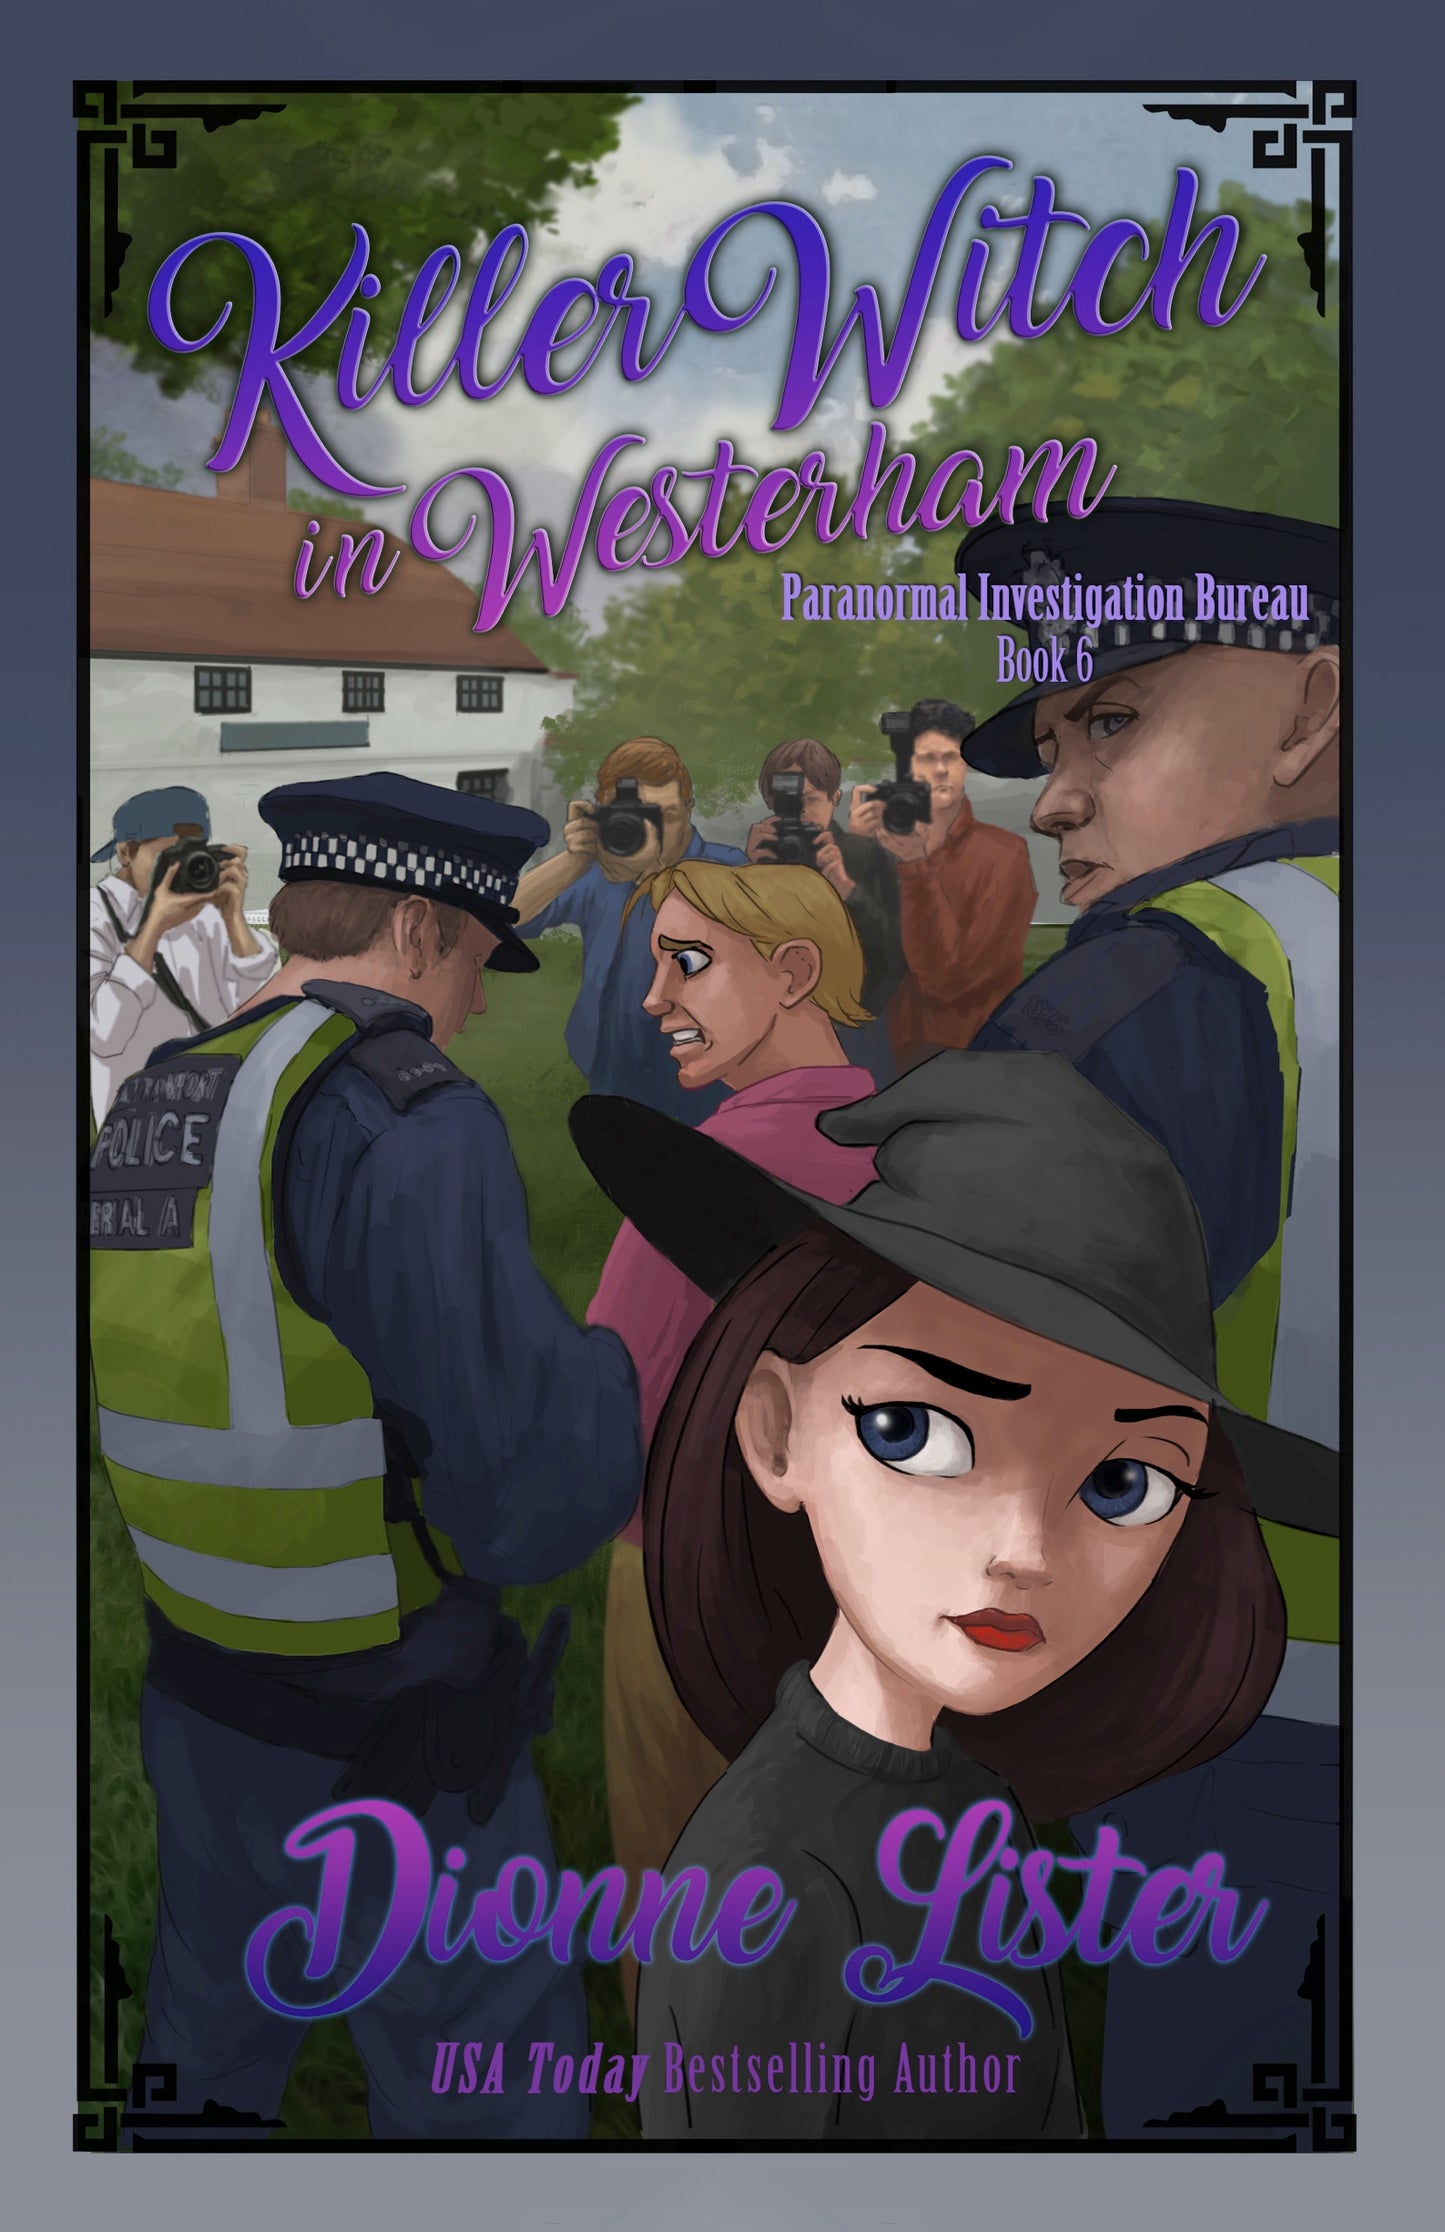 Killer Witch in Westerham—Paranormal Investigation Bureau Book 6